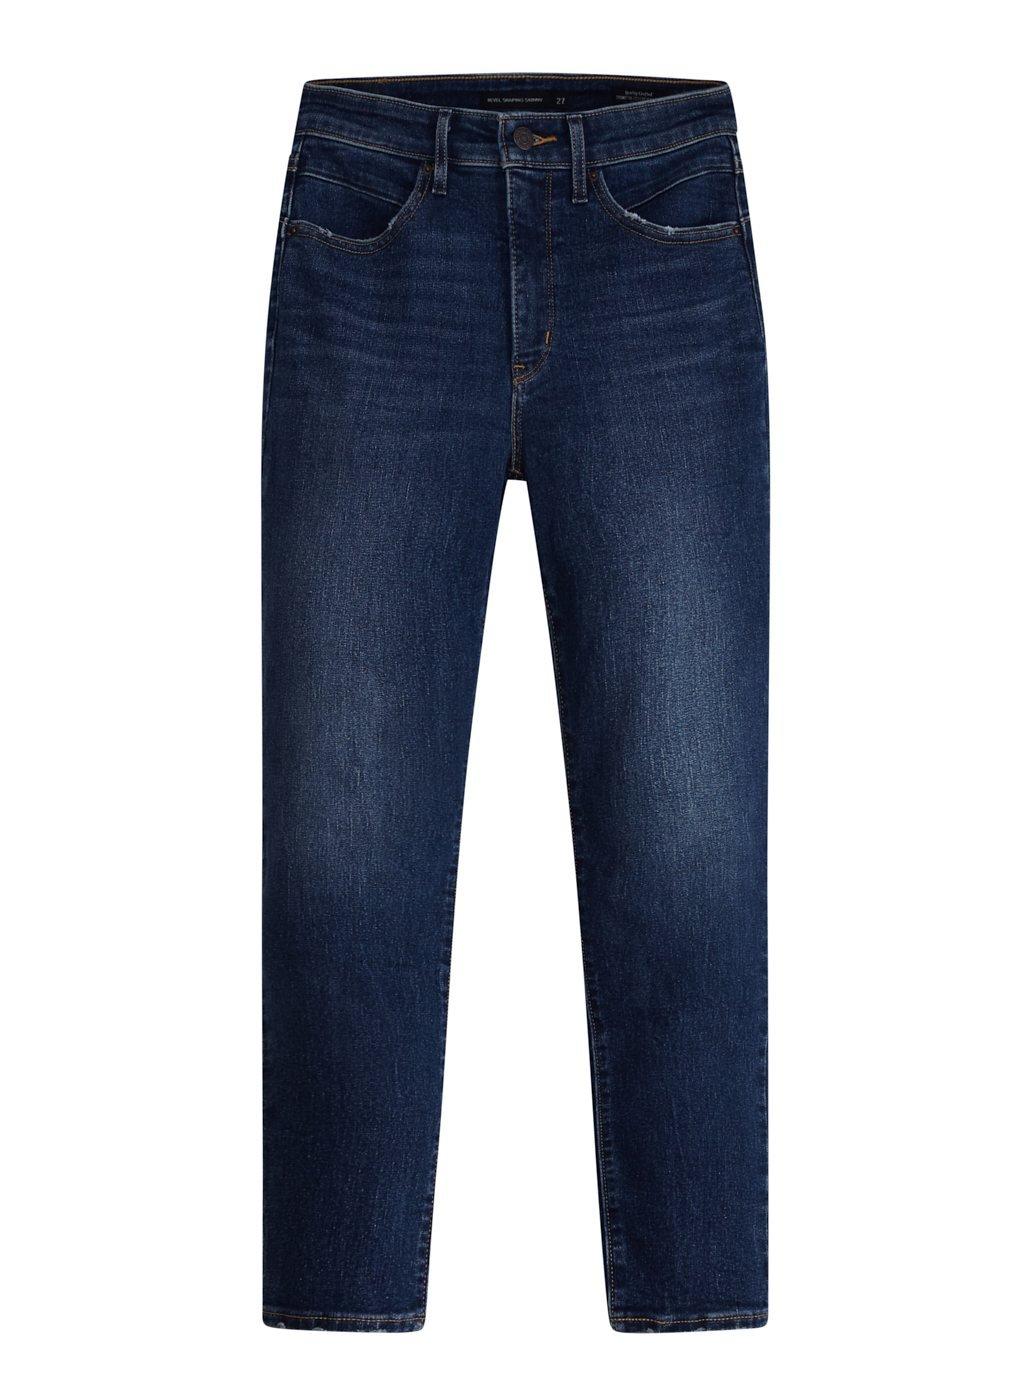 Levi's® Hong Kong womens revel shaping high rise skinny new jeans 748960024 19 Details